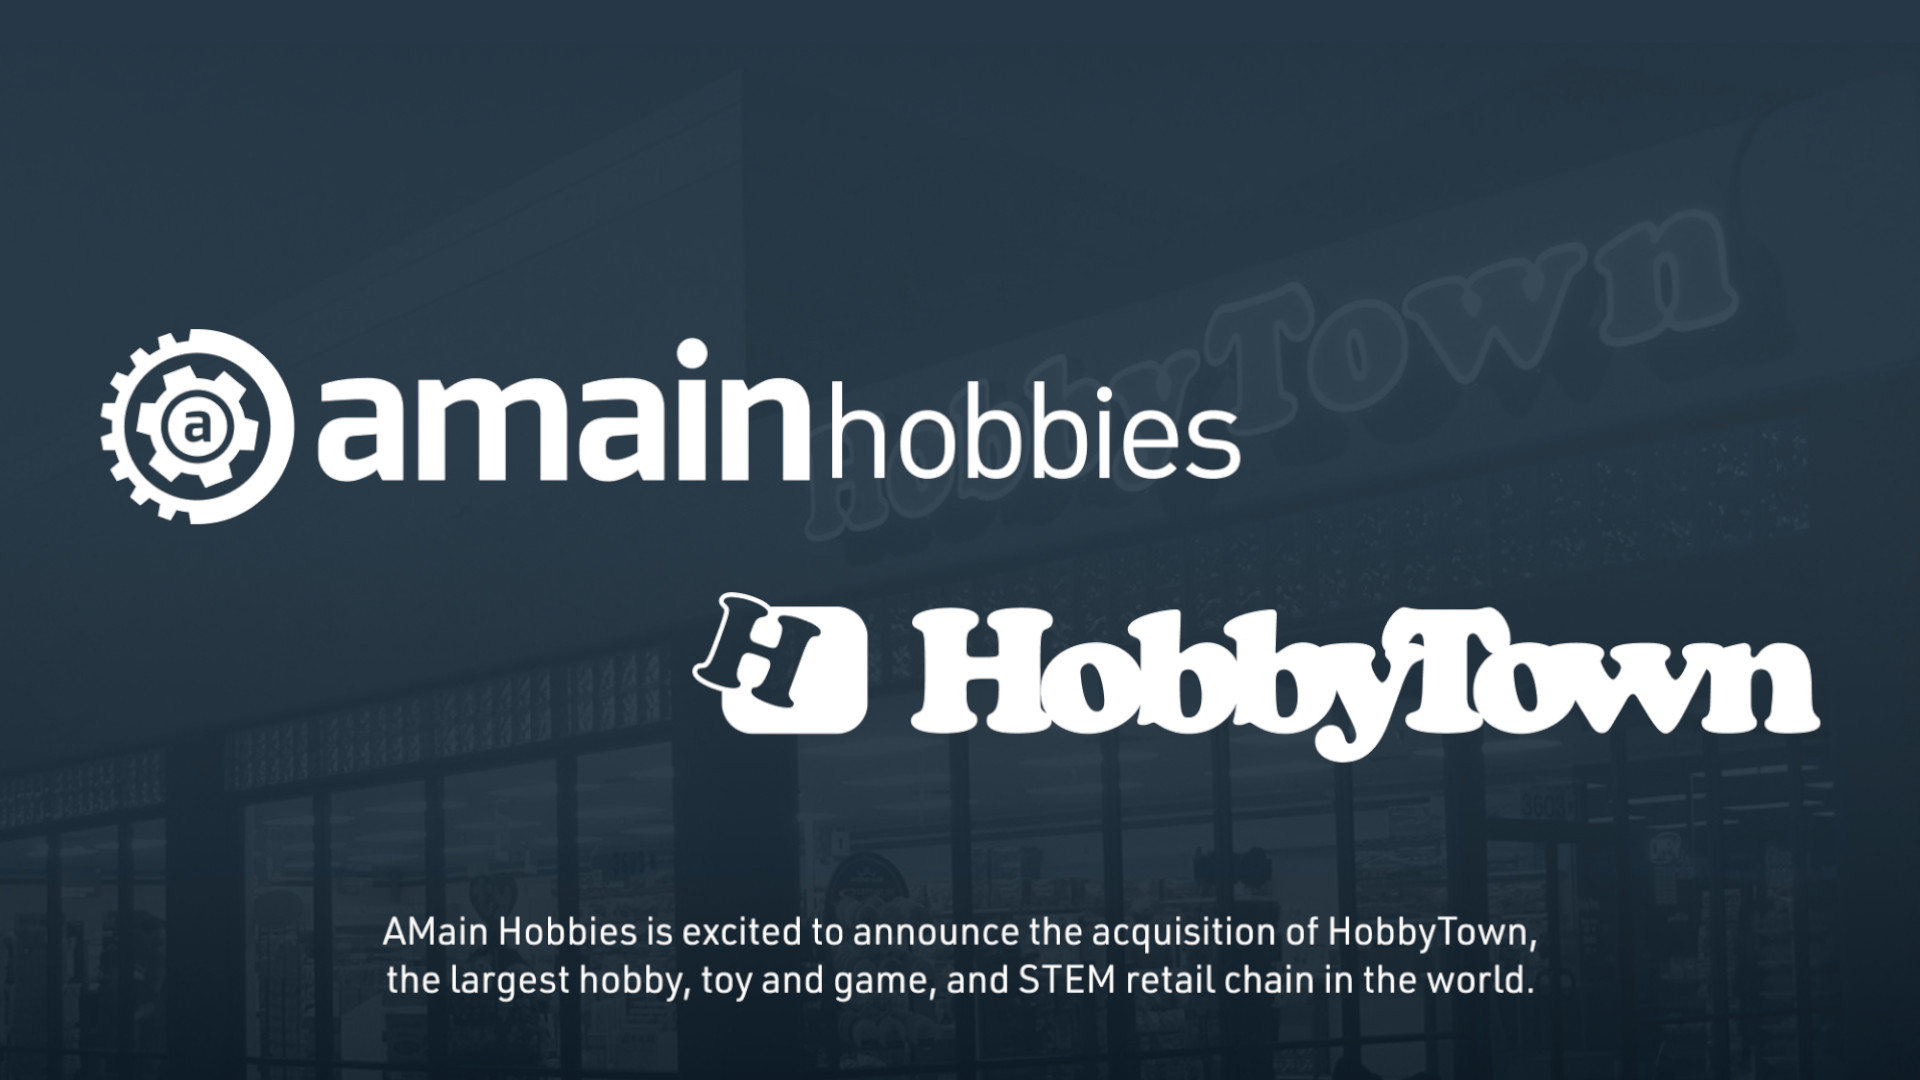 AMain Hobbies To Acquire HobbyTown